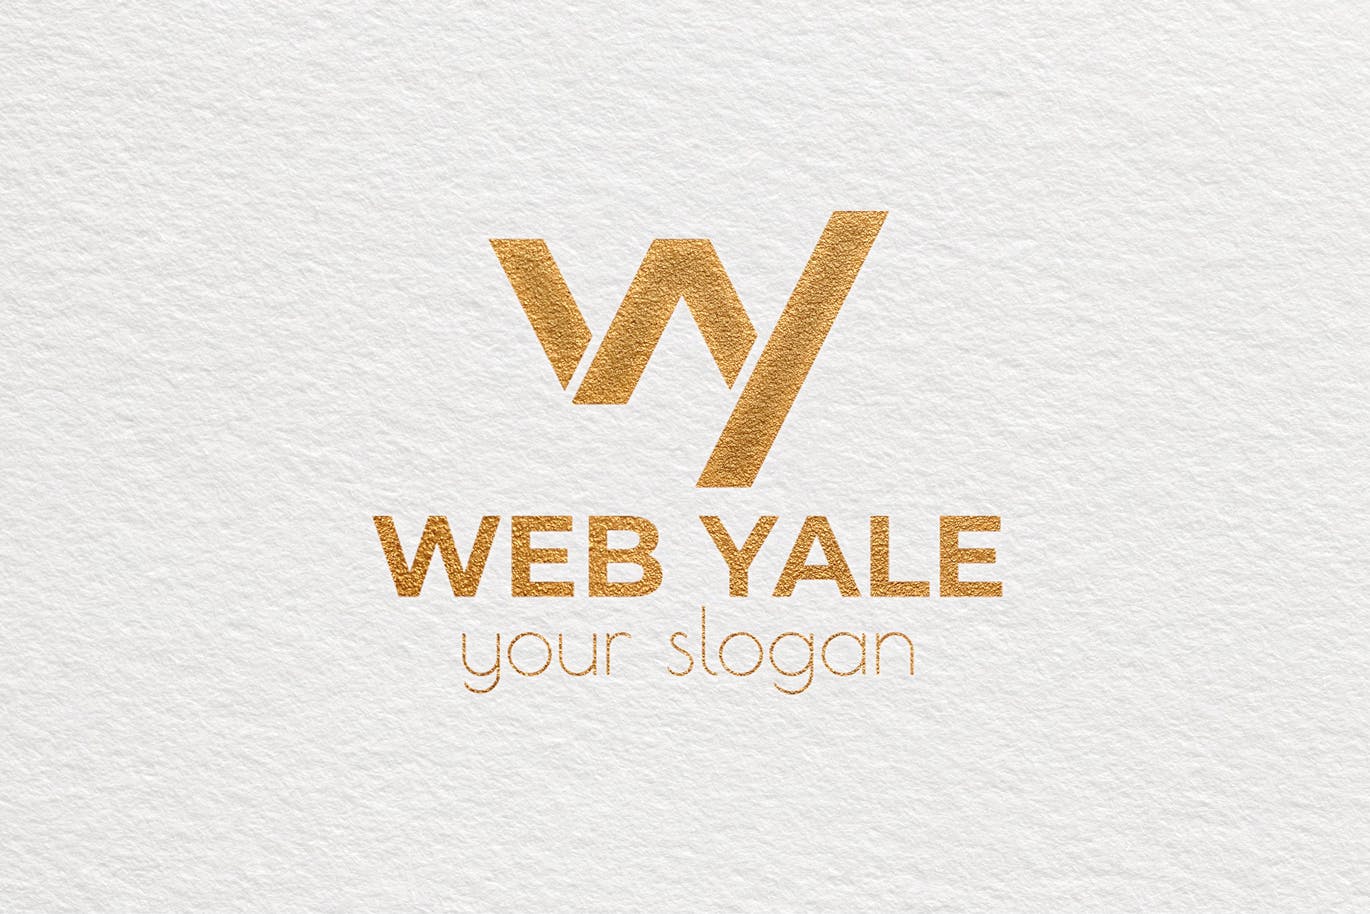 W&Y字母组合几何图形现代Logo设计素材中国精选模板 Web Yale Modern Logo Template插图(3)